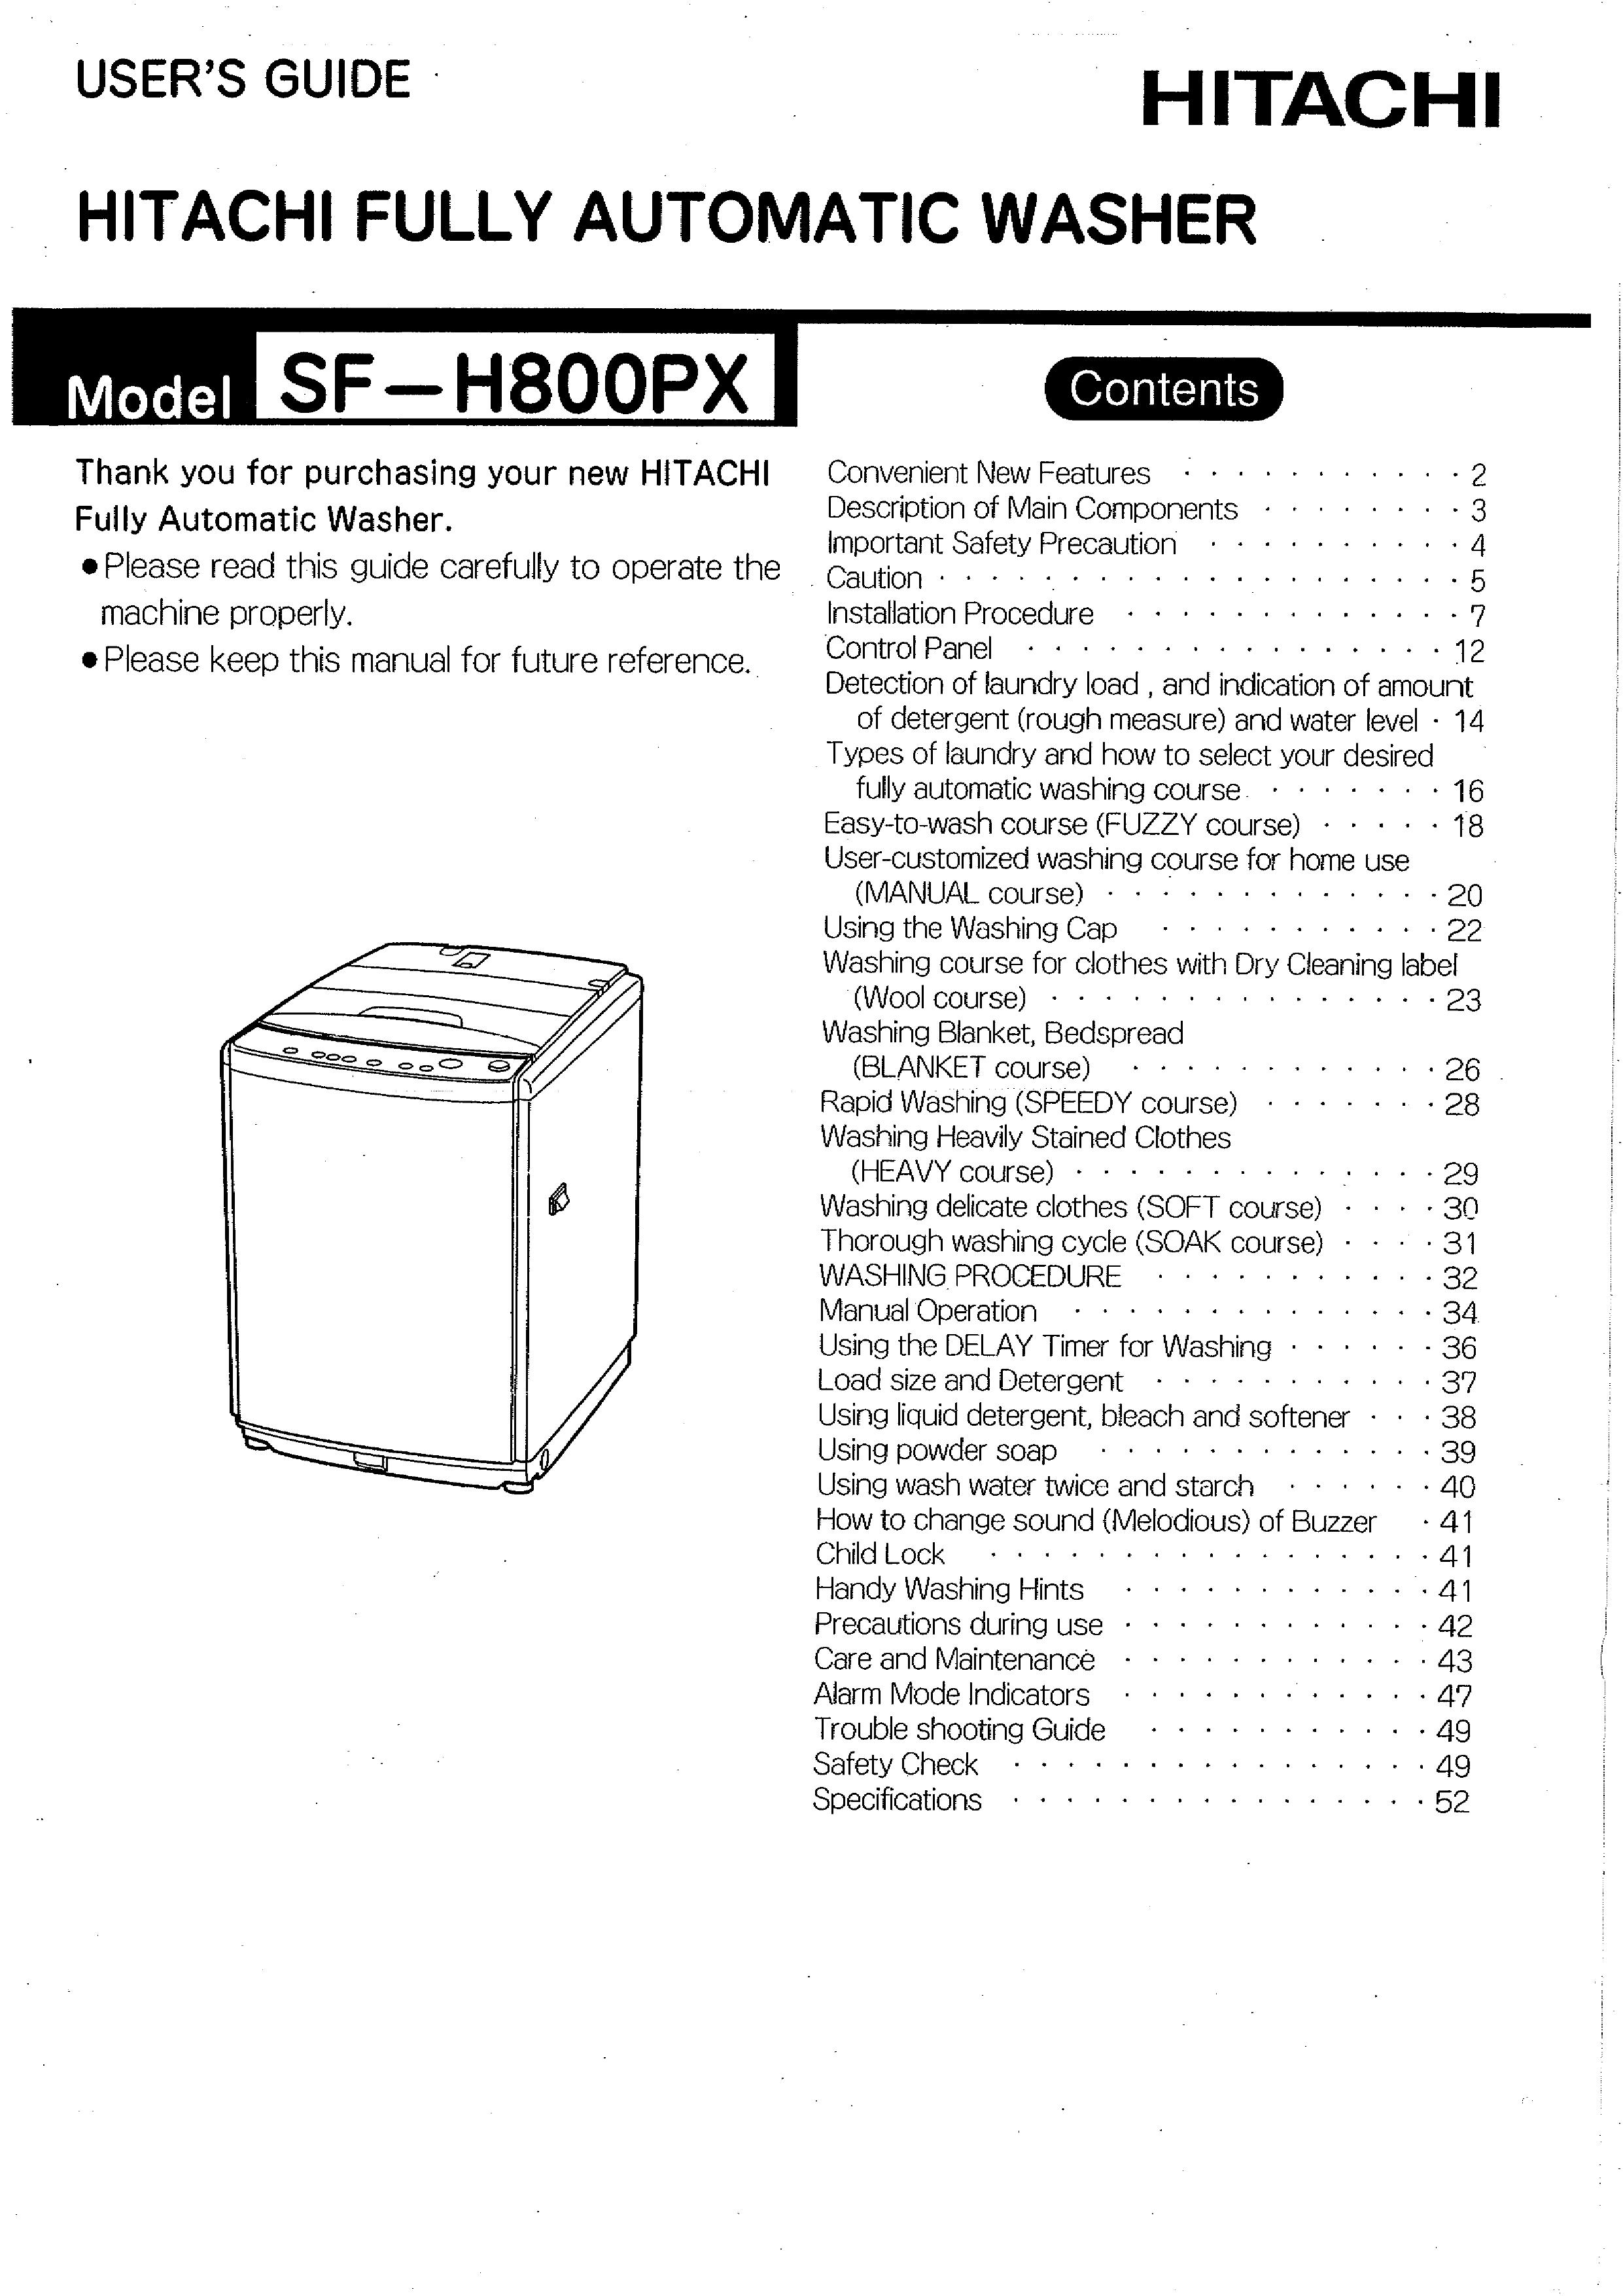 Hitachi SF-H800PX Washer User Manual